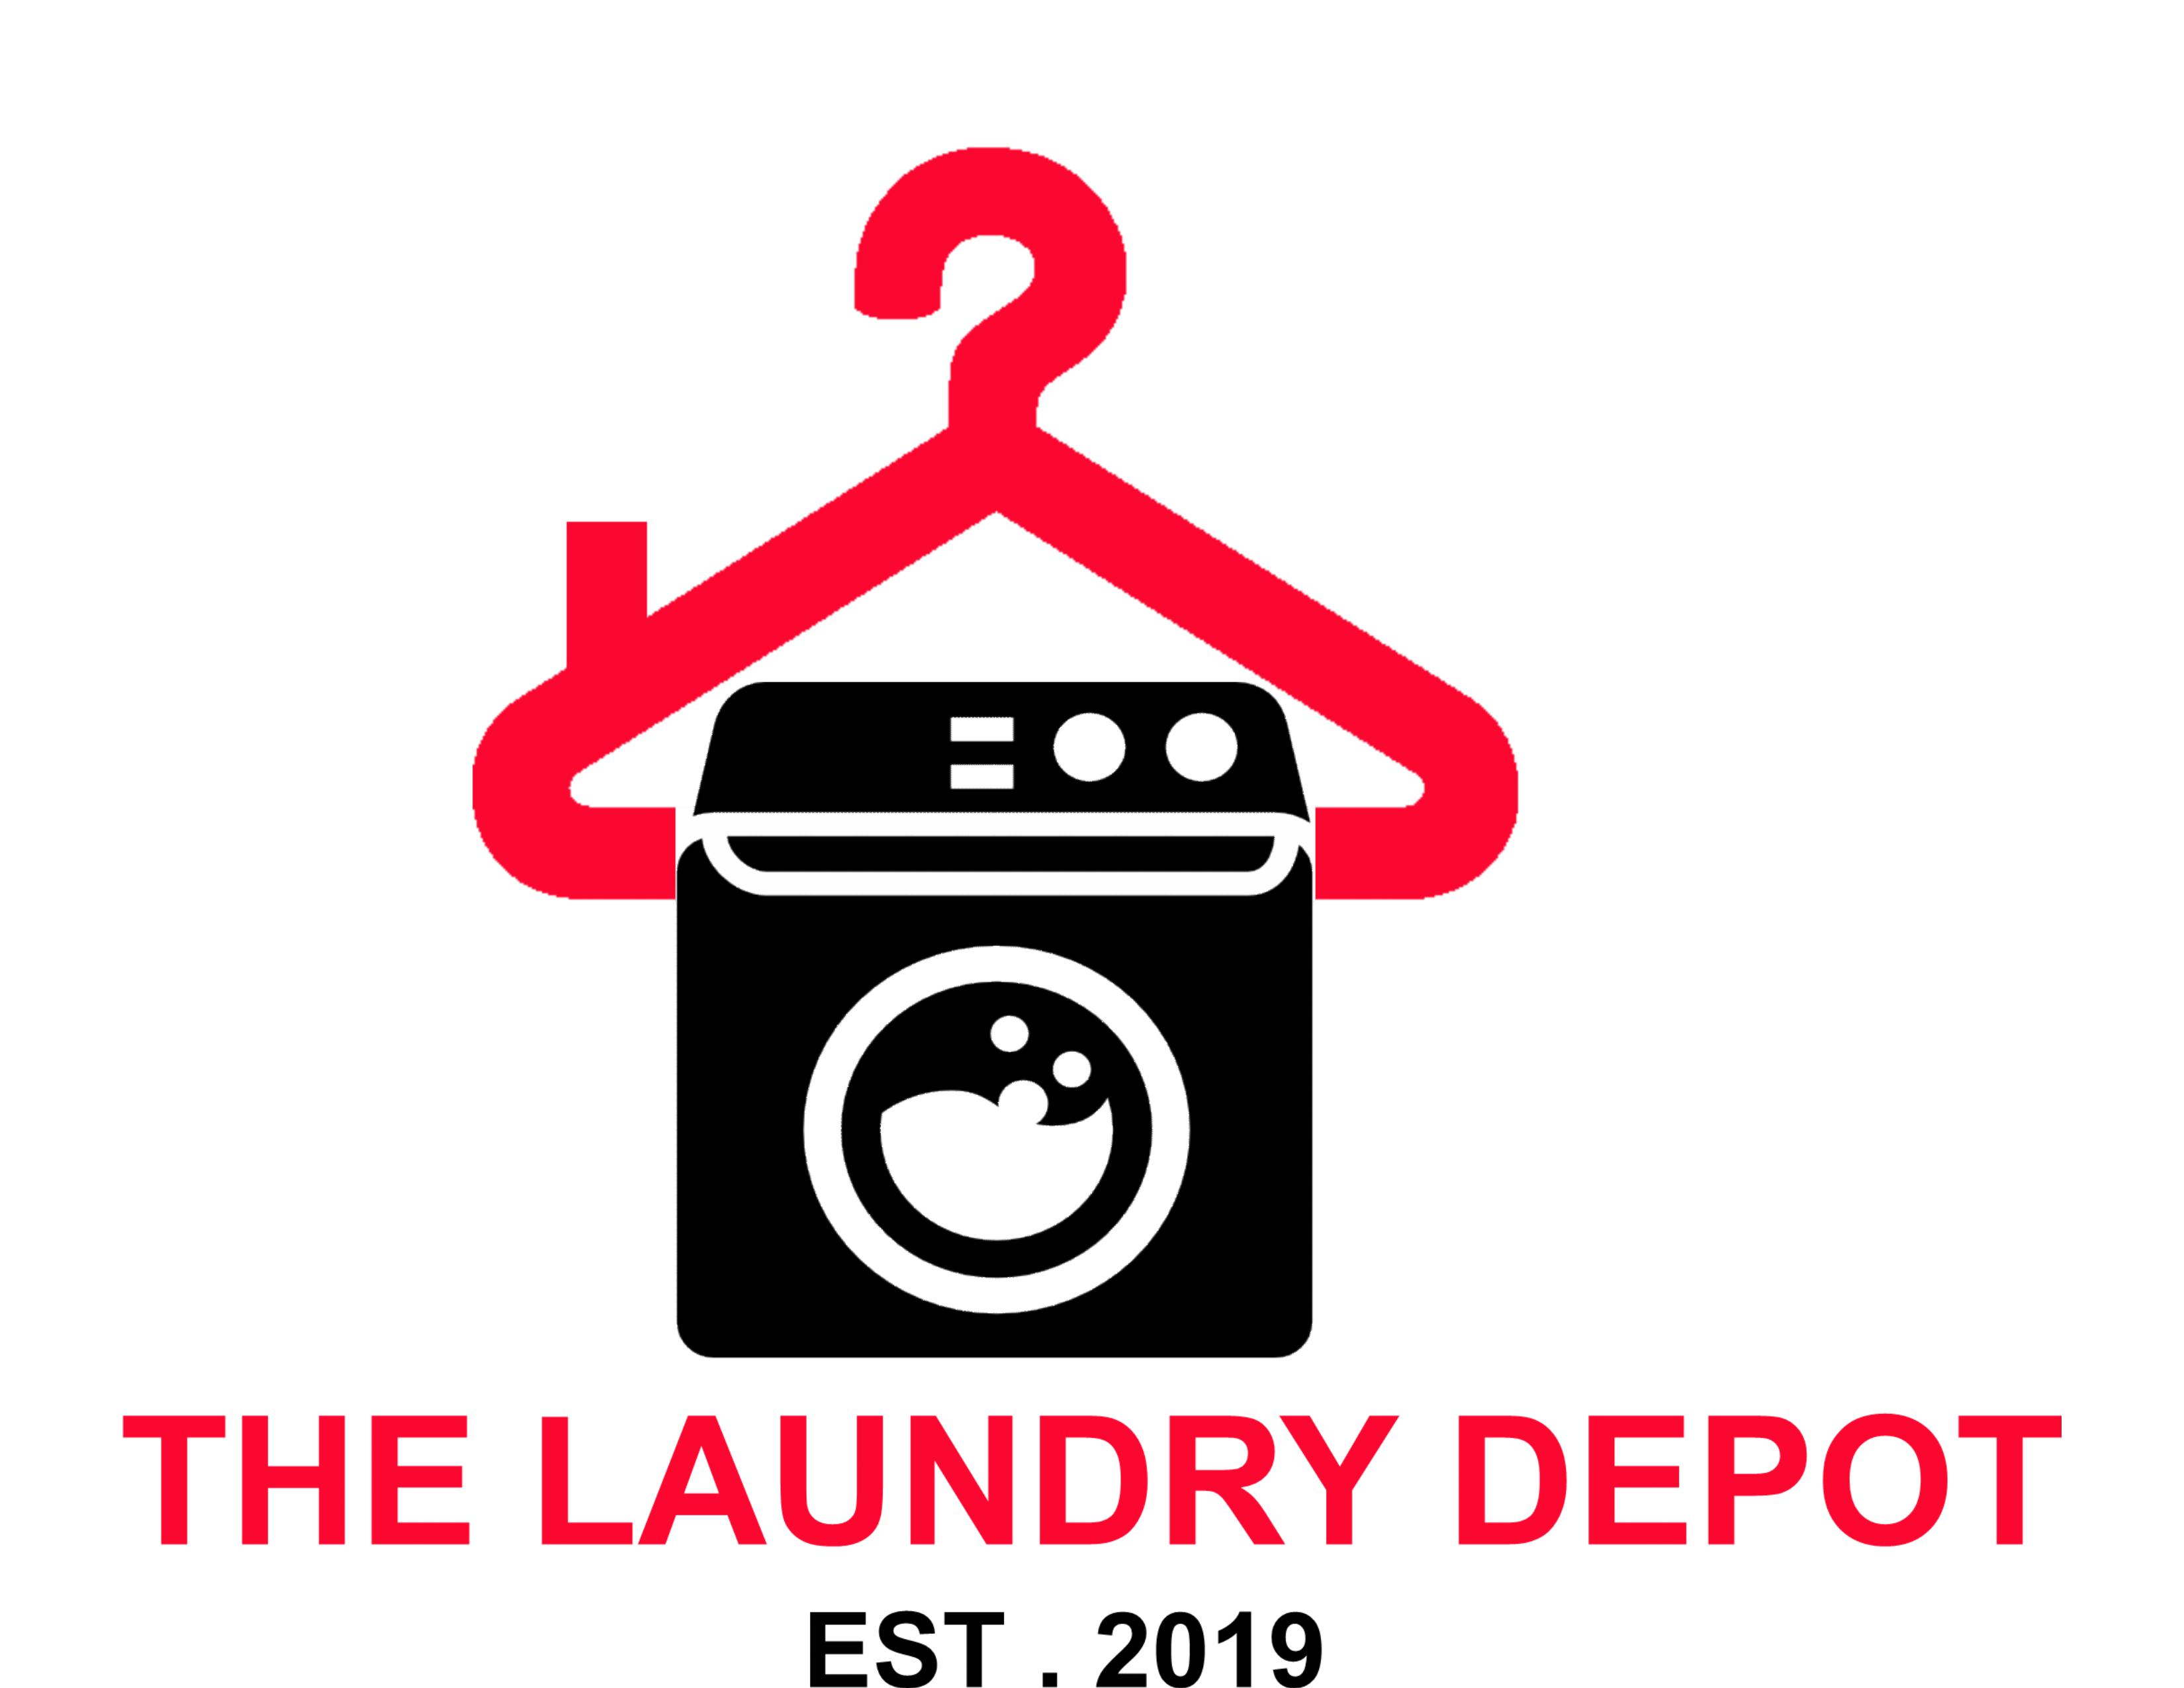 The Laundry Depot